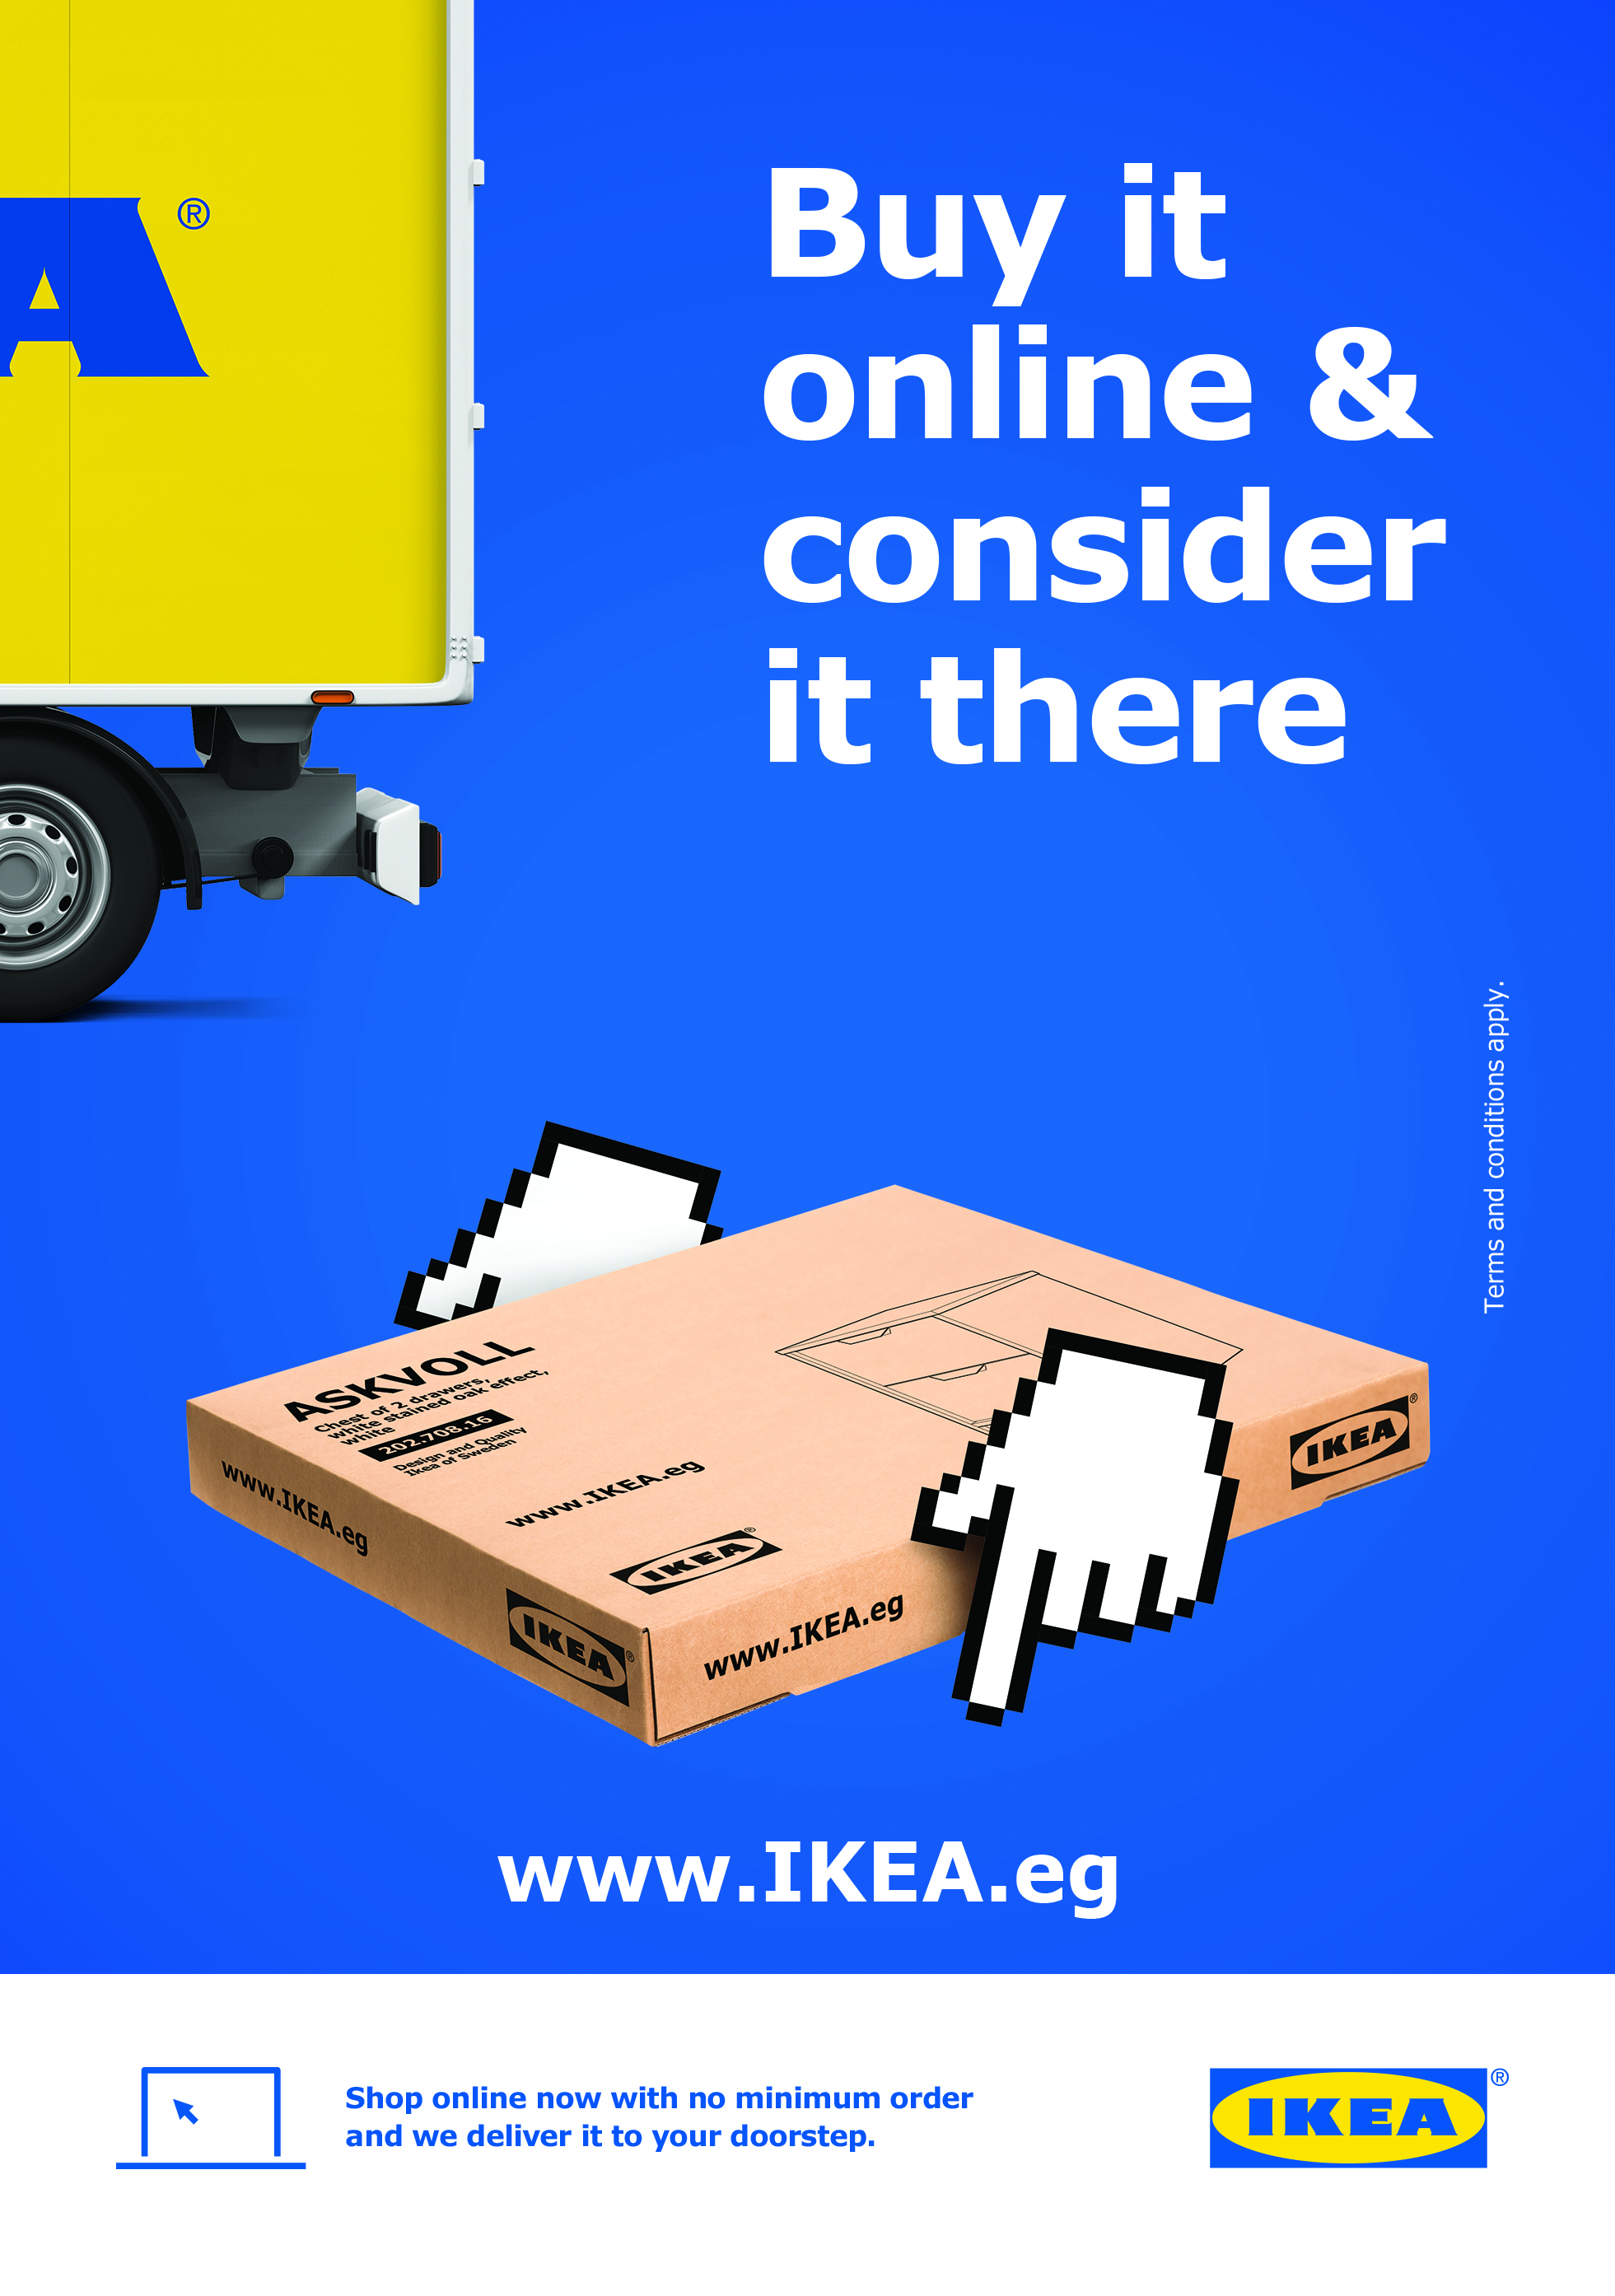 verbanning Mechanica Tektonisch Your Favorite Furniture Retailer, IKEA, is Introducing Online Shopping -  Scoop Empire